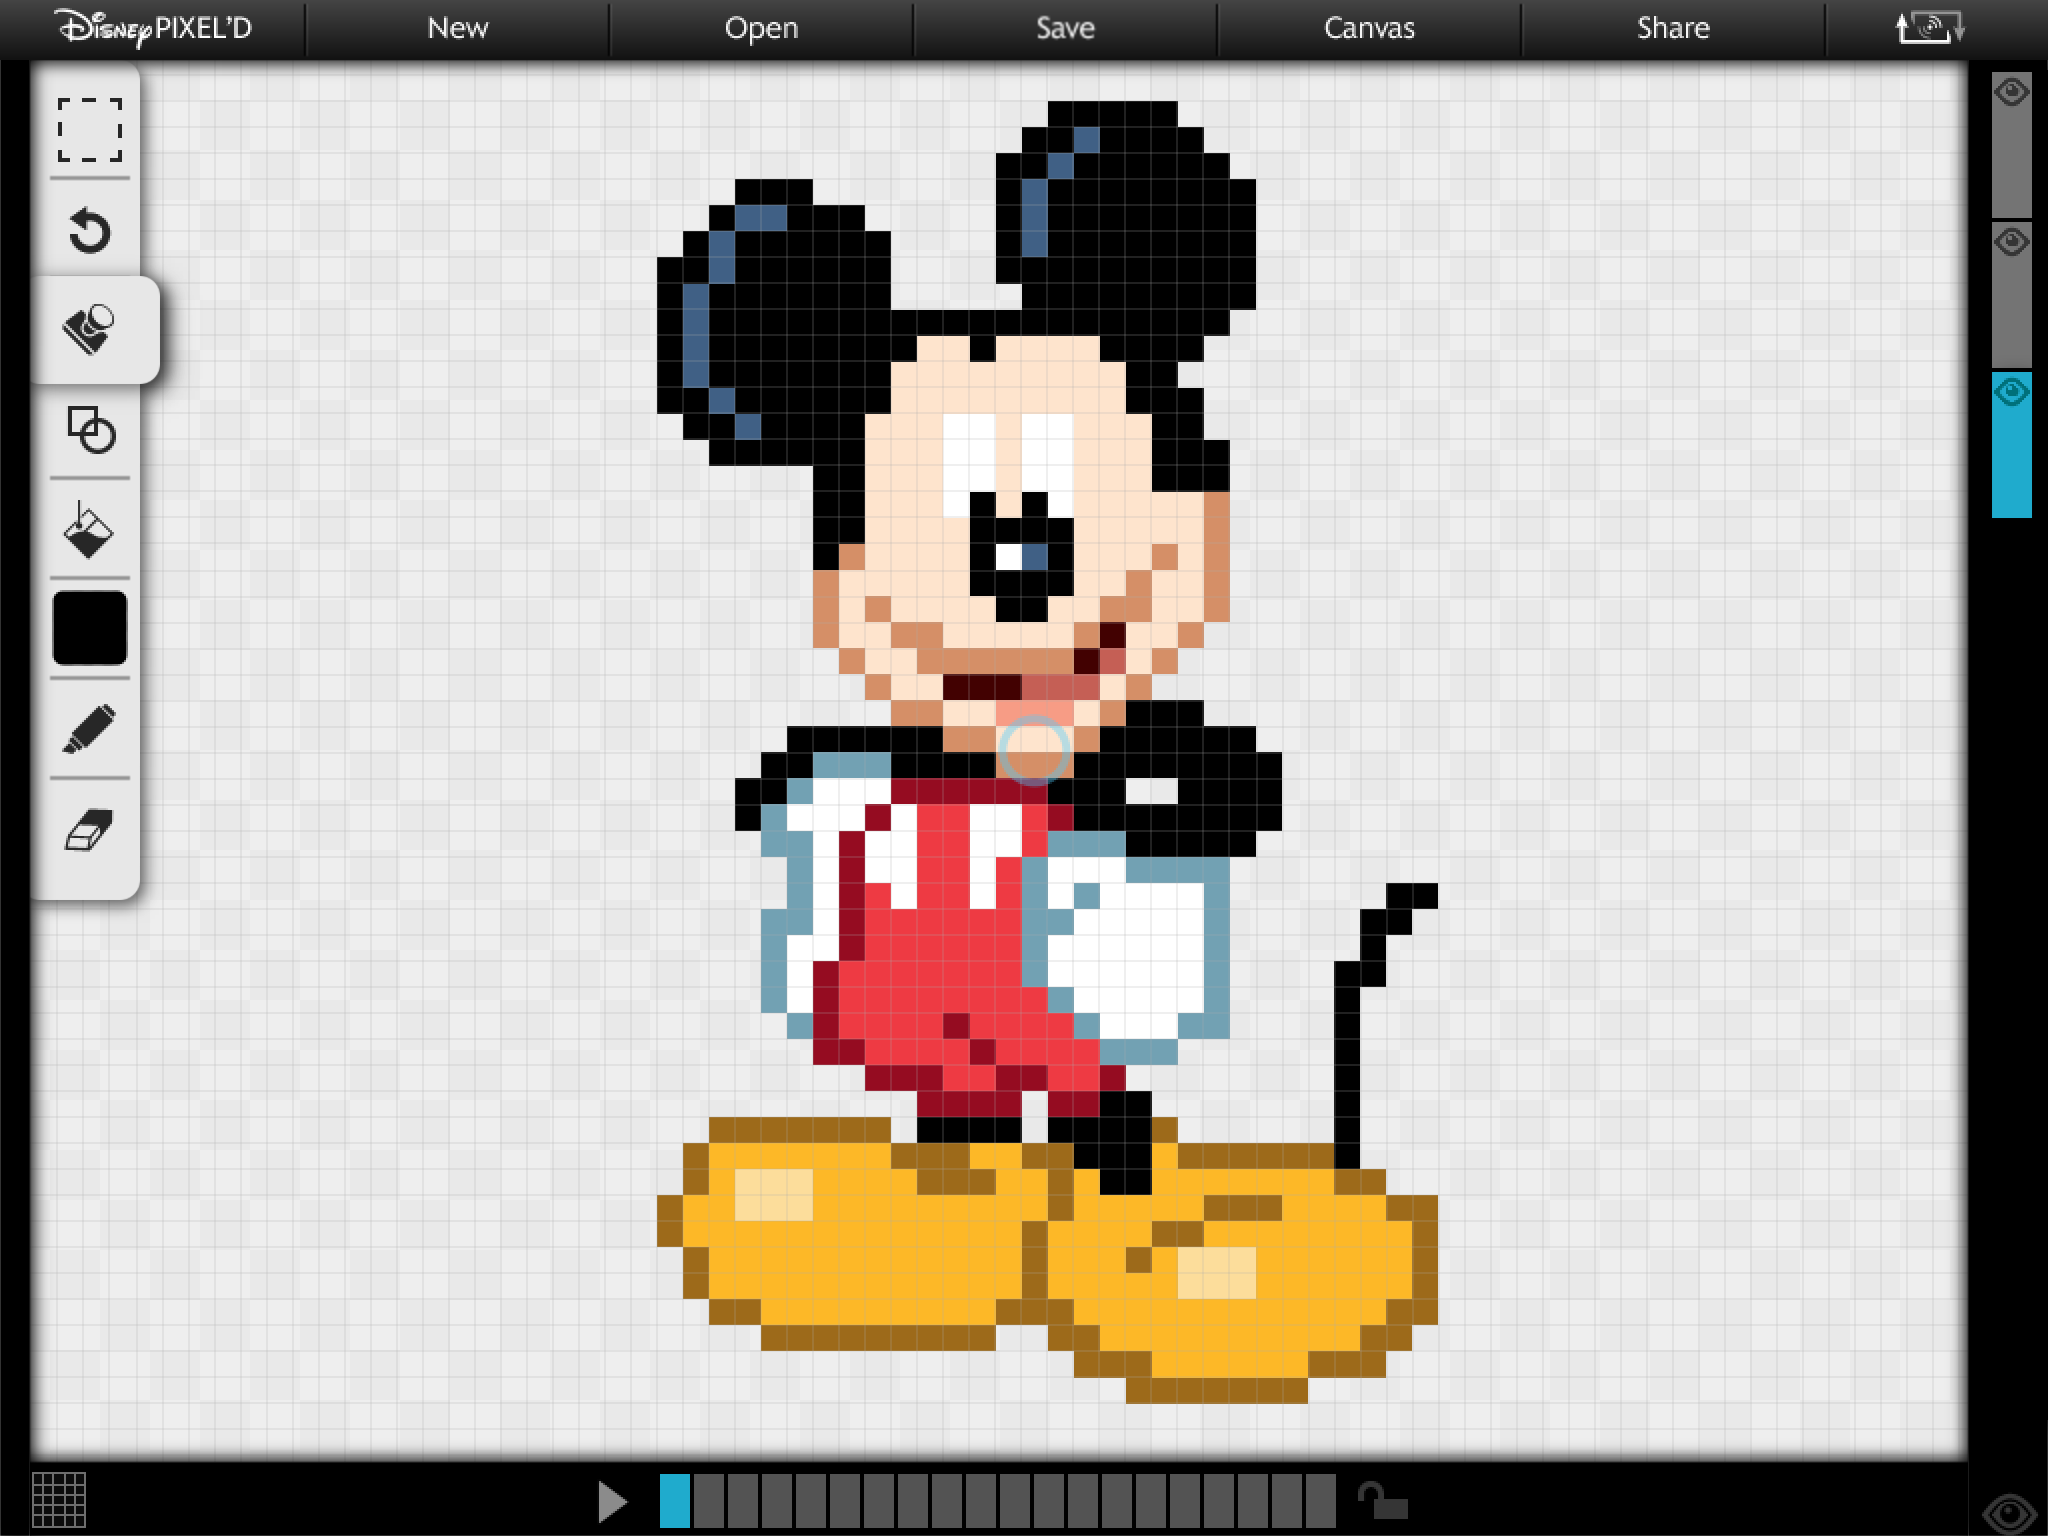 iOS App of the Day: Disney PIXEL’D